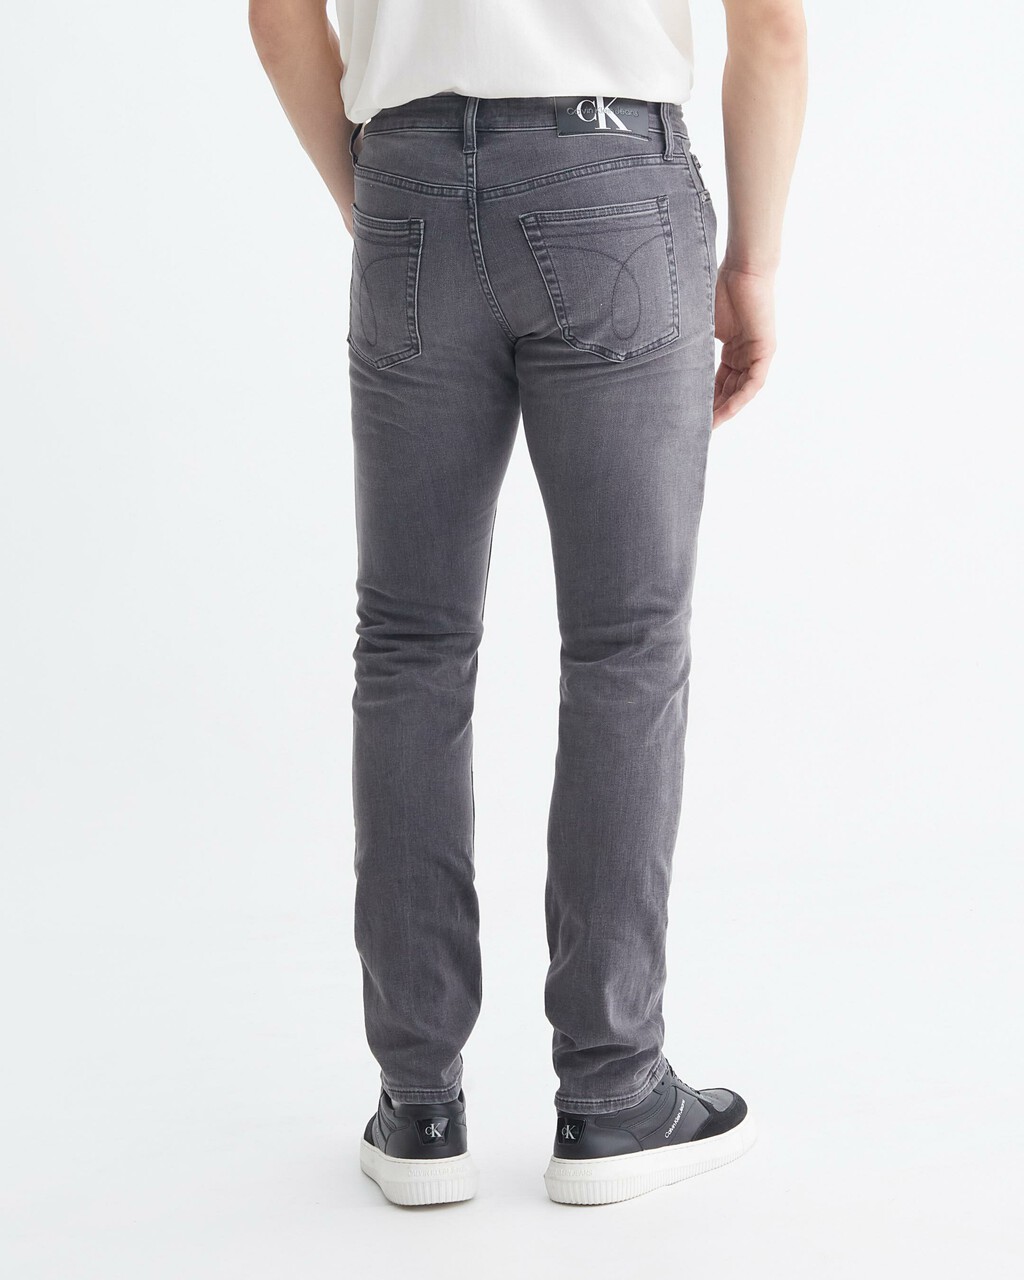 Reconsidered Grey Stretch Slim Jeans, Grey, hi-res